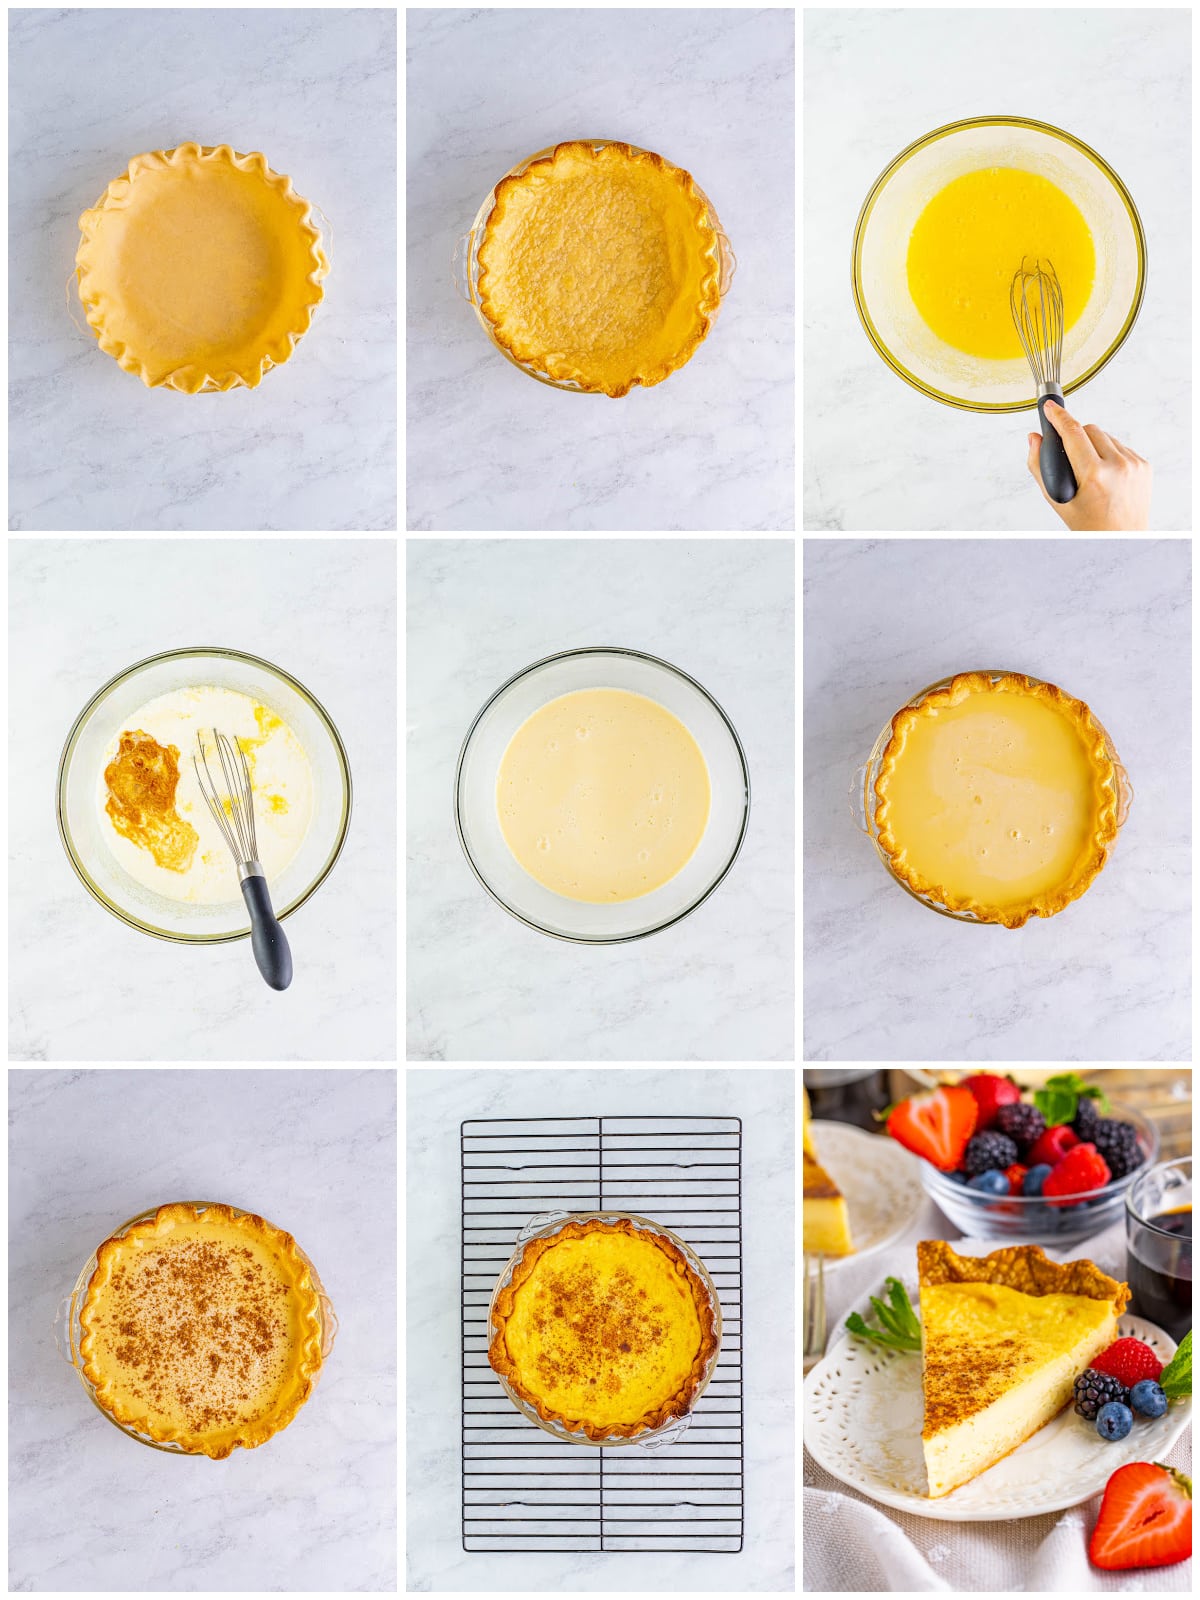 Step by step photos on how to make a Custard Pie.